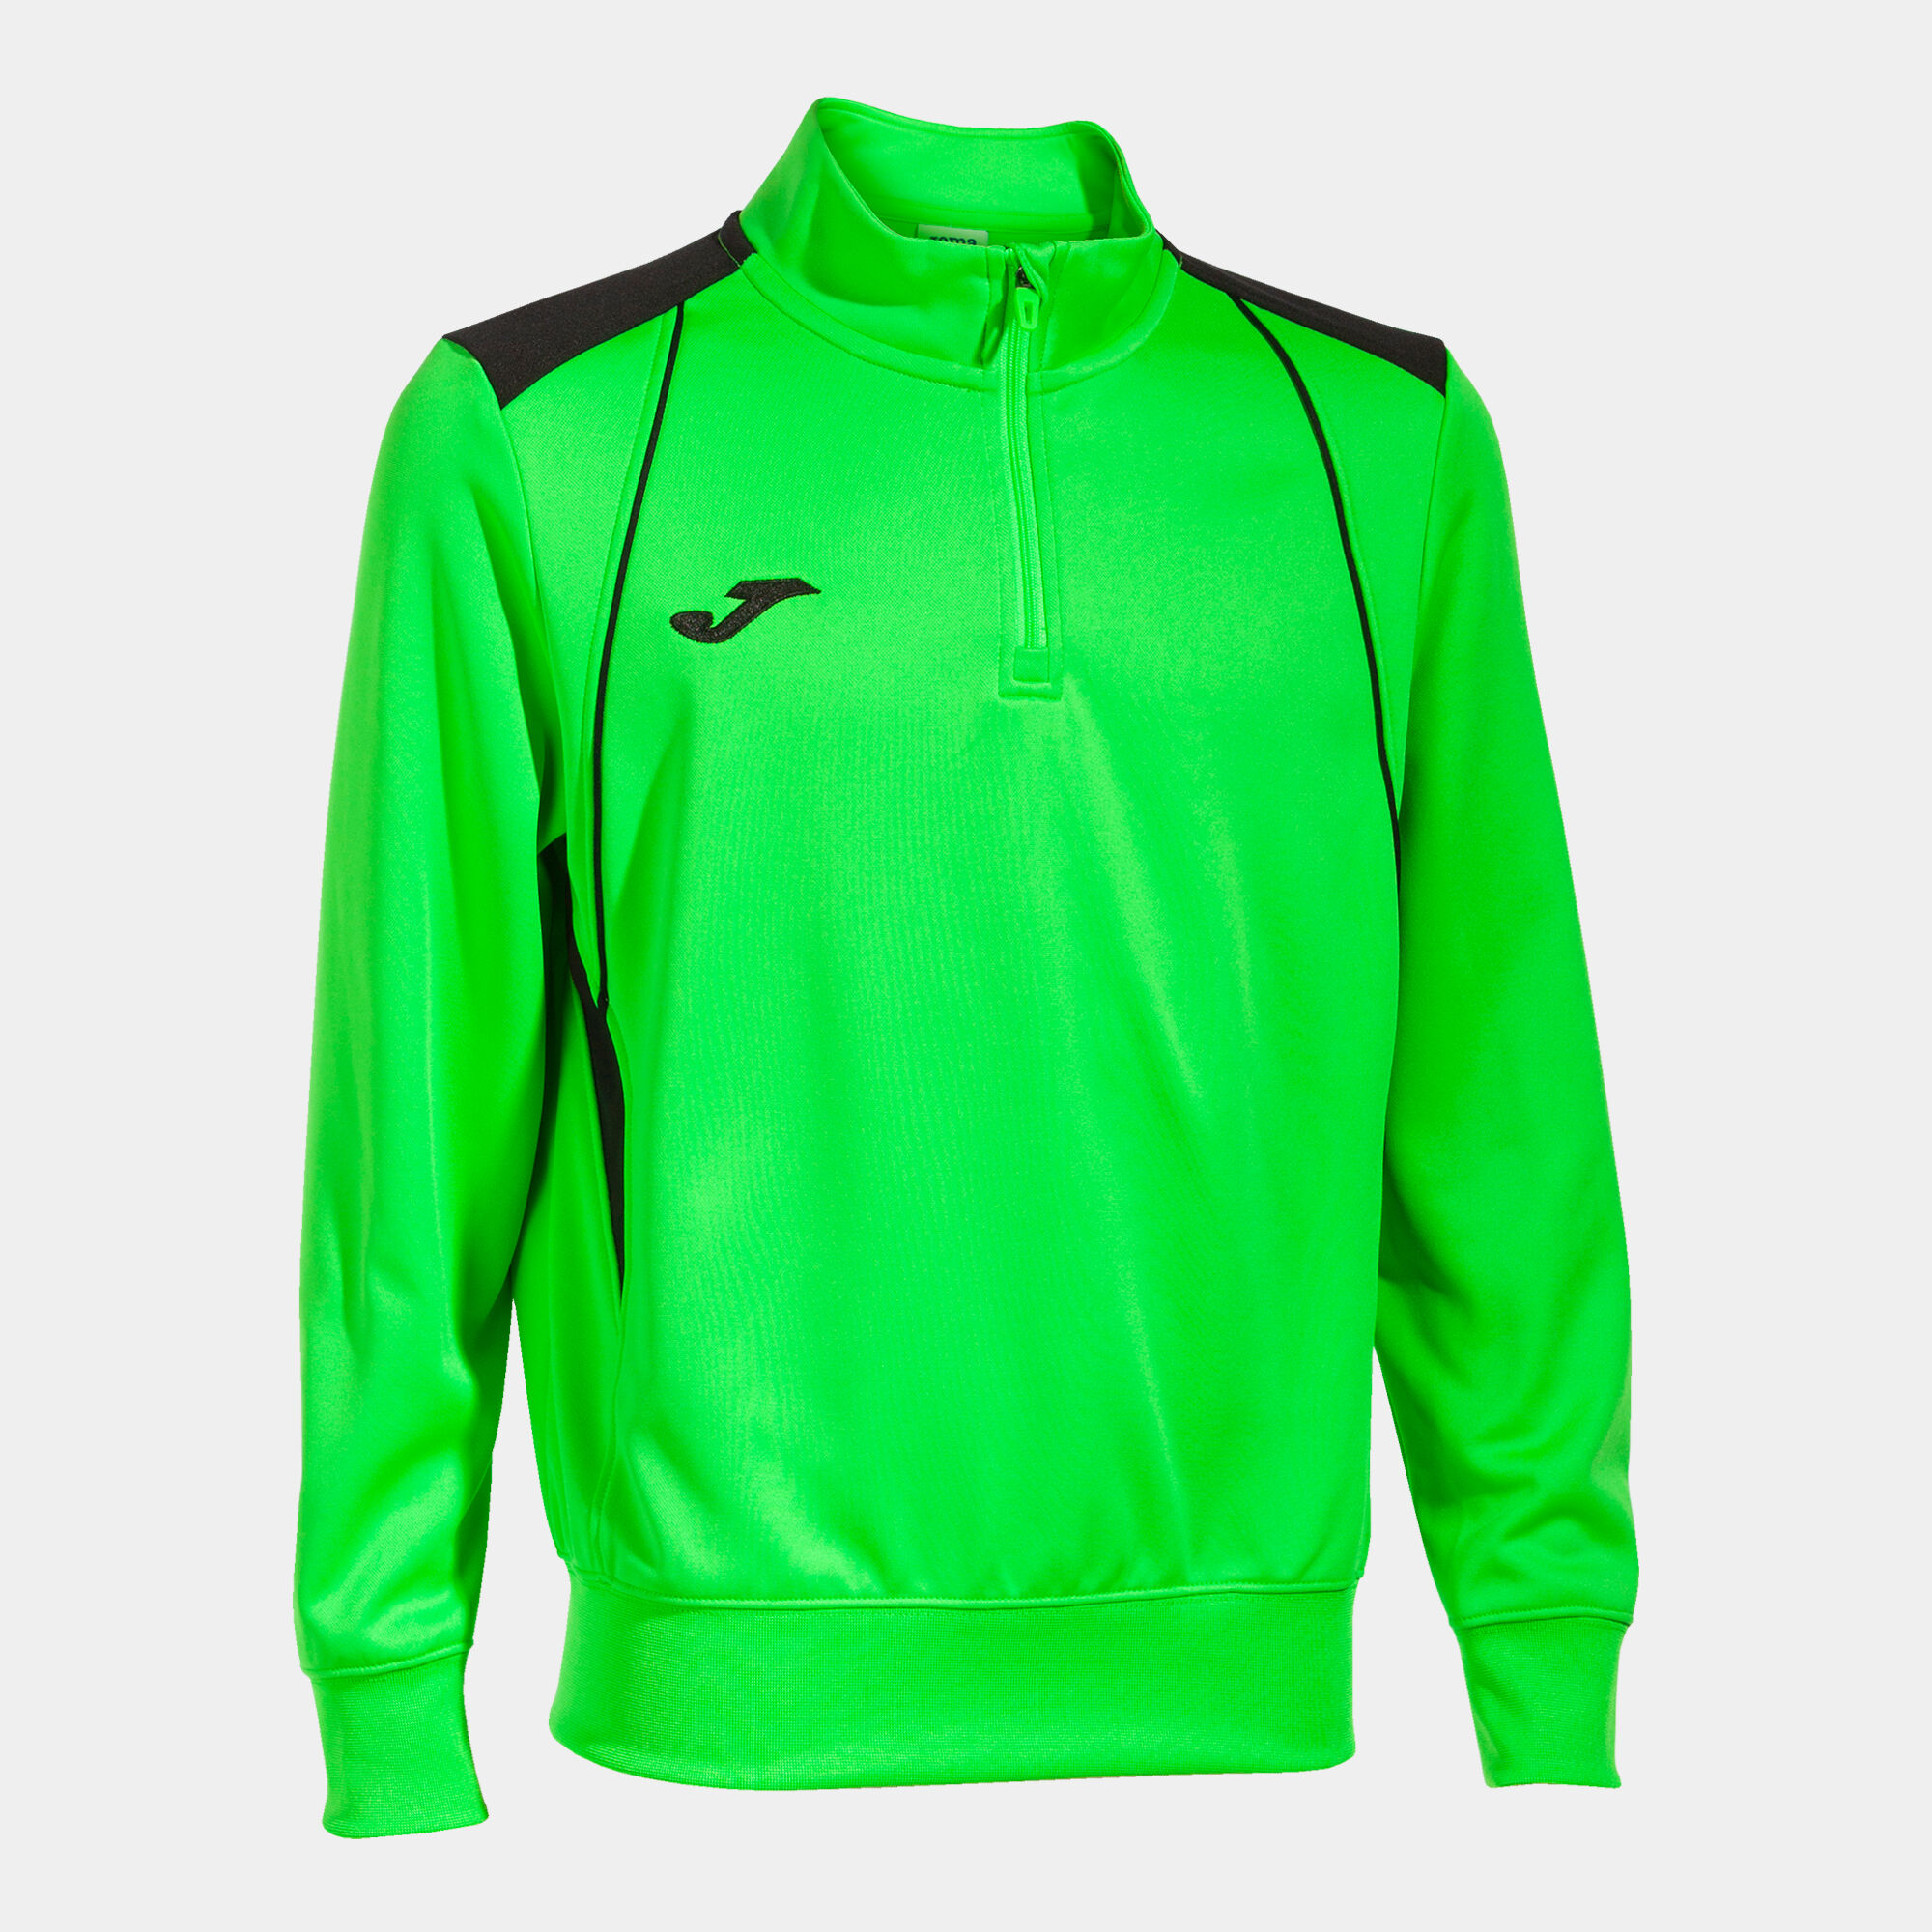 Sweat-shirt homme Championship VII vert fluo noir